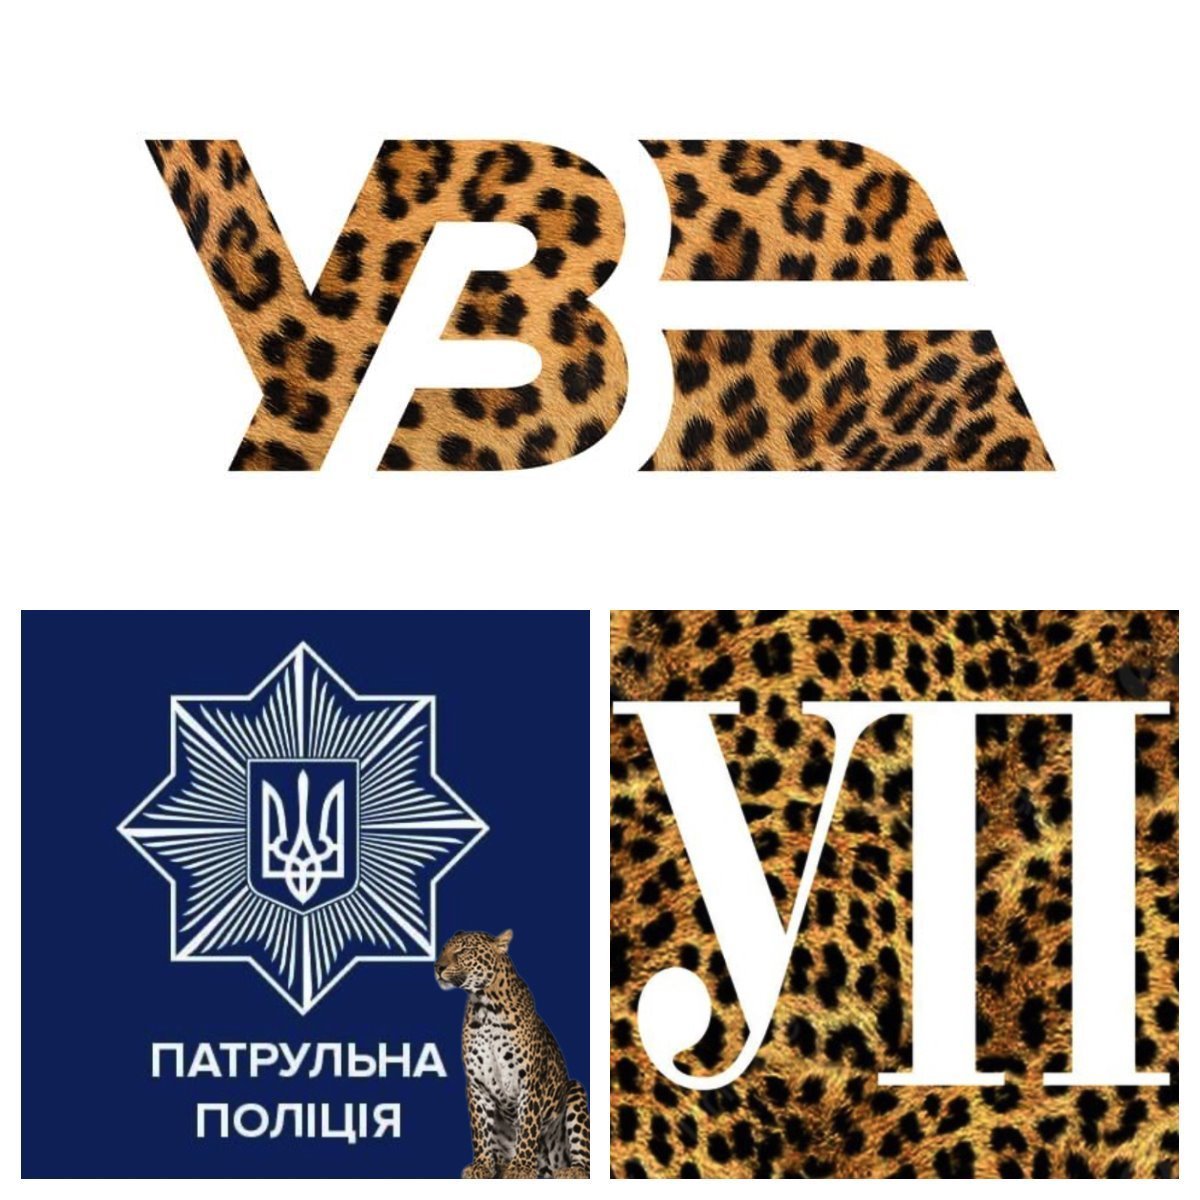 Logos of Ukrainska Pravda, traffic police and Ukrainian National Railways with leopard designs